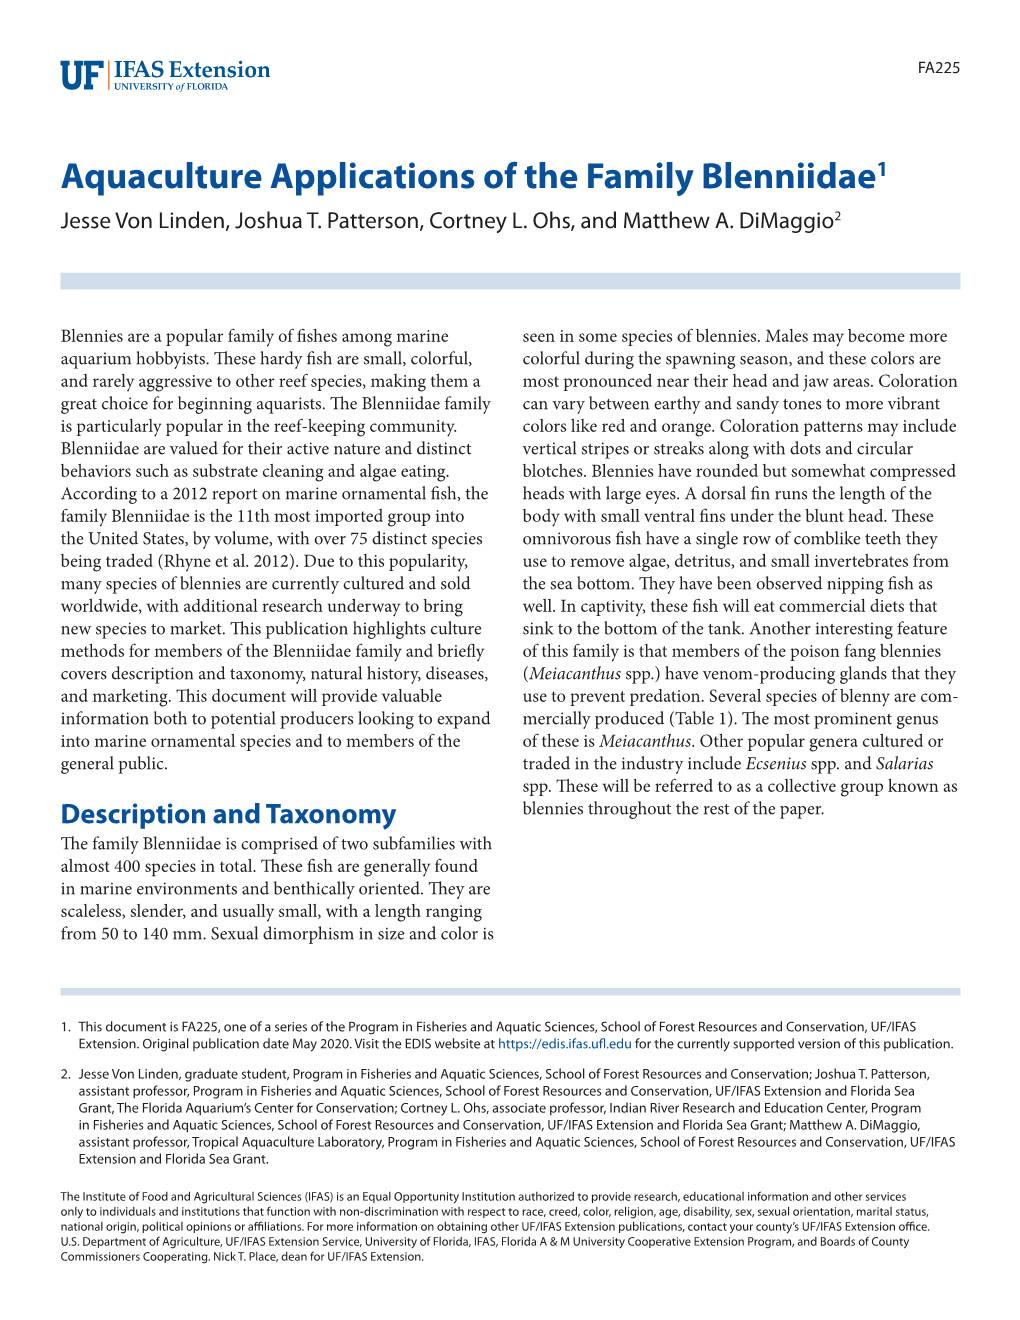 Aquaculture Applications of the Family Blenniidae1 Jesse Von Linden, Joshua T